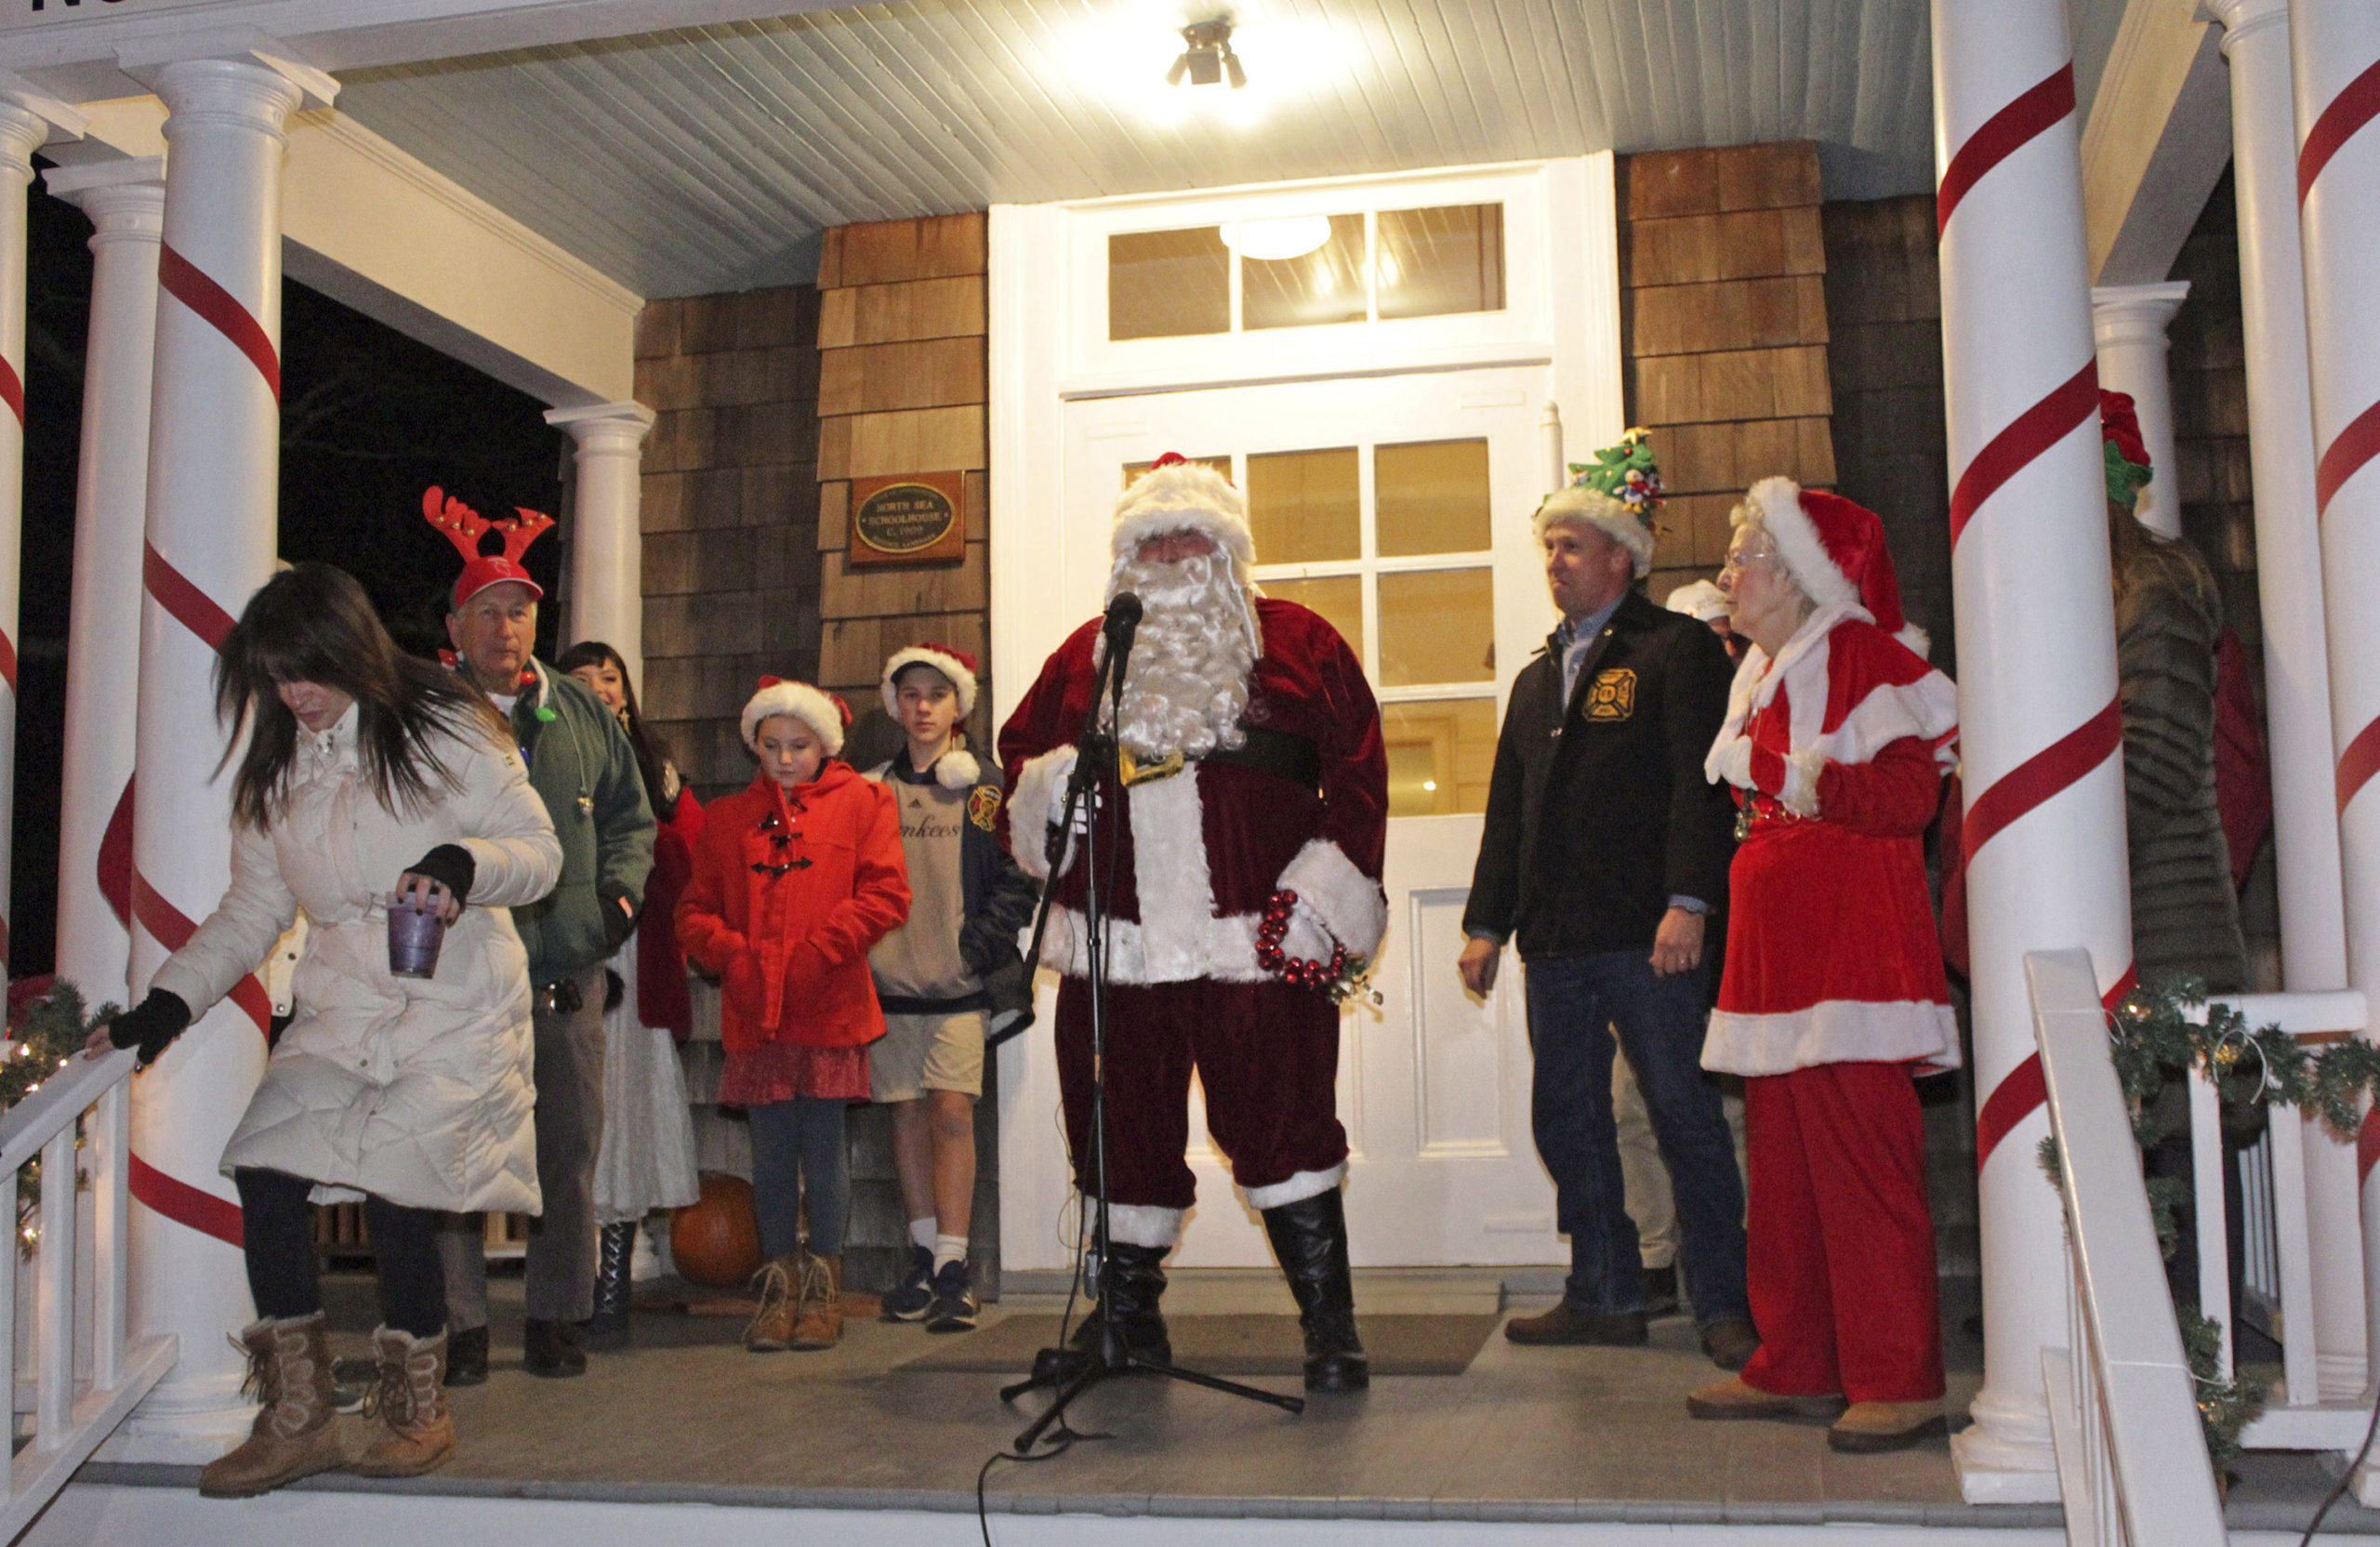 Santa arrives at the North Sea Community Association's annual tree lighting on Saturday.